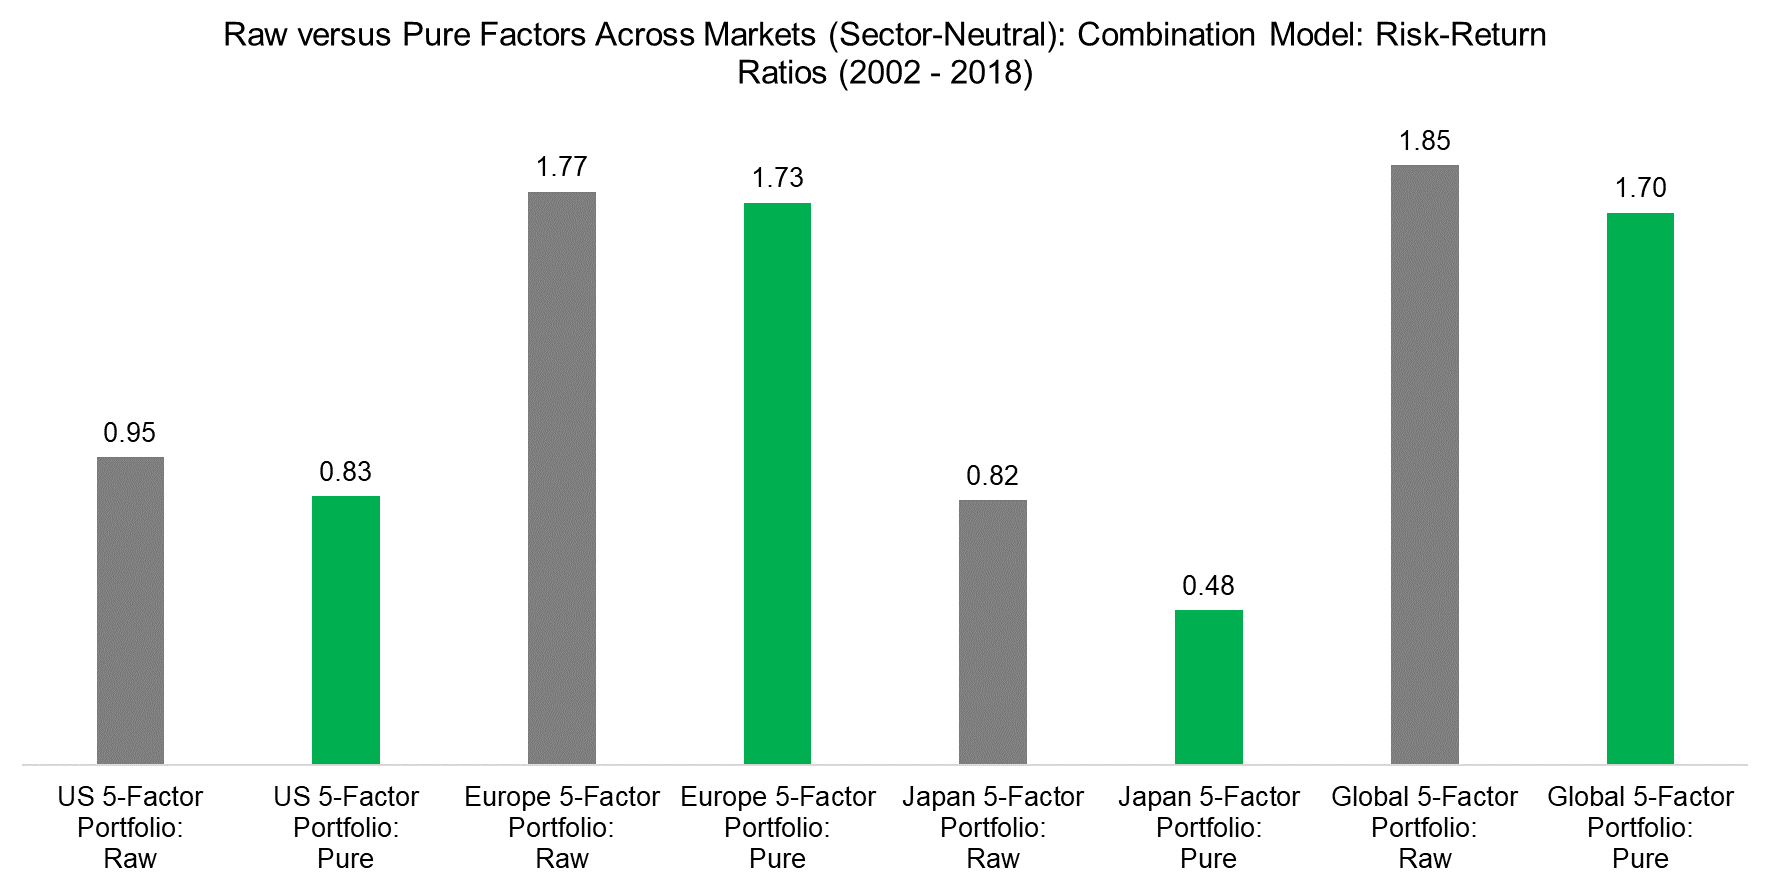 Raw versus Pure Factors Across Markets (Sector-Neutral) Combination Model Risk-Return Ratios (2002 - 20